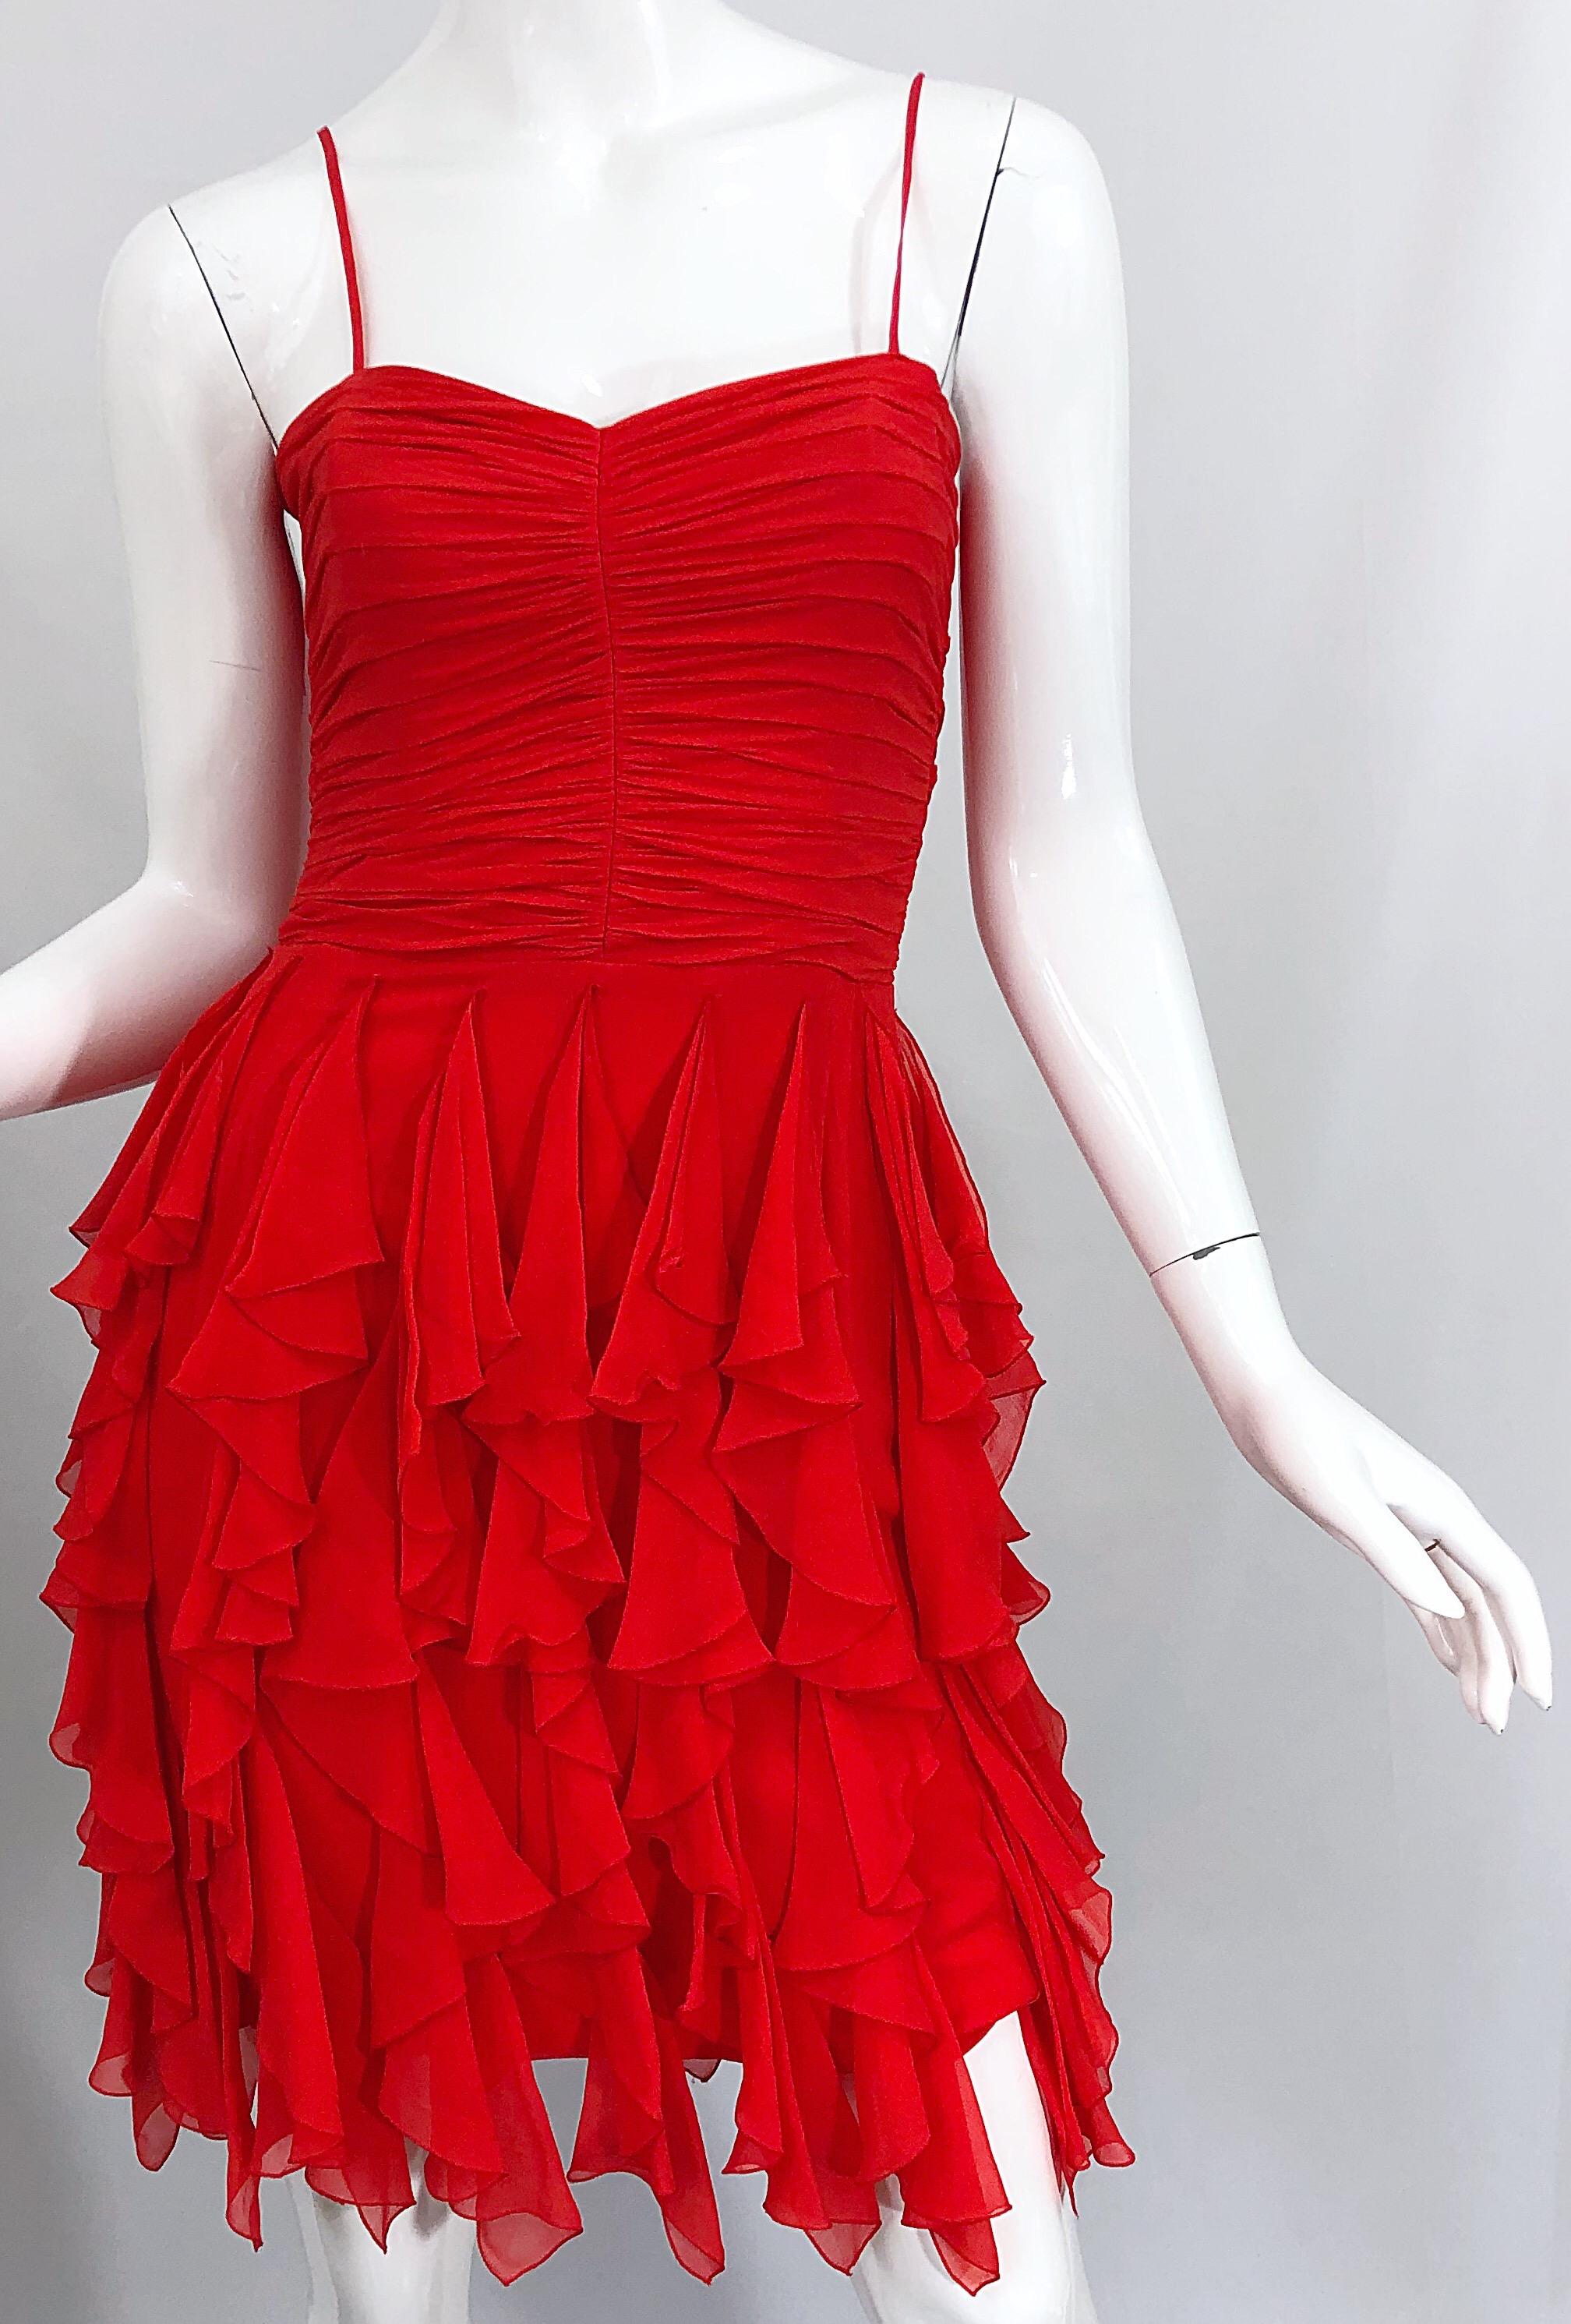 1980s Louis Feraud Size 4 Lipstick Red Silk Chiffon 80s Vintage Dress + Shawl  For Sale 4